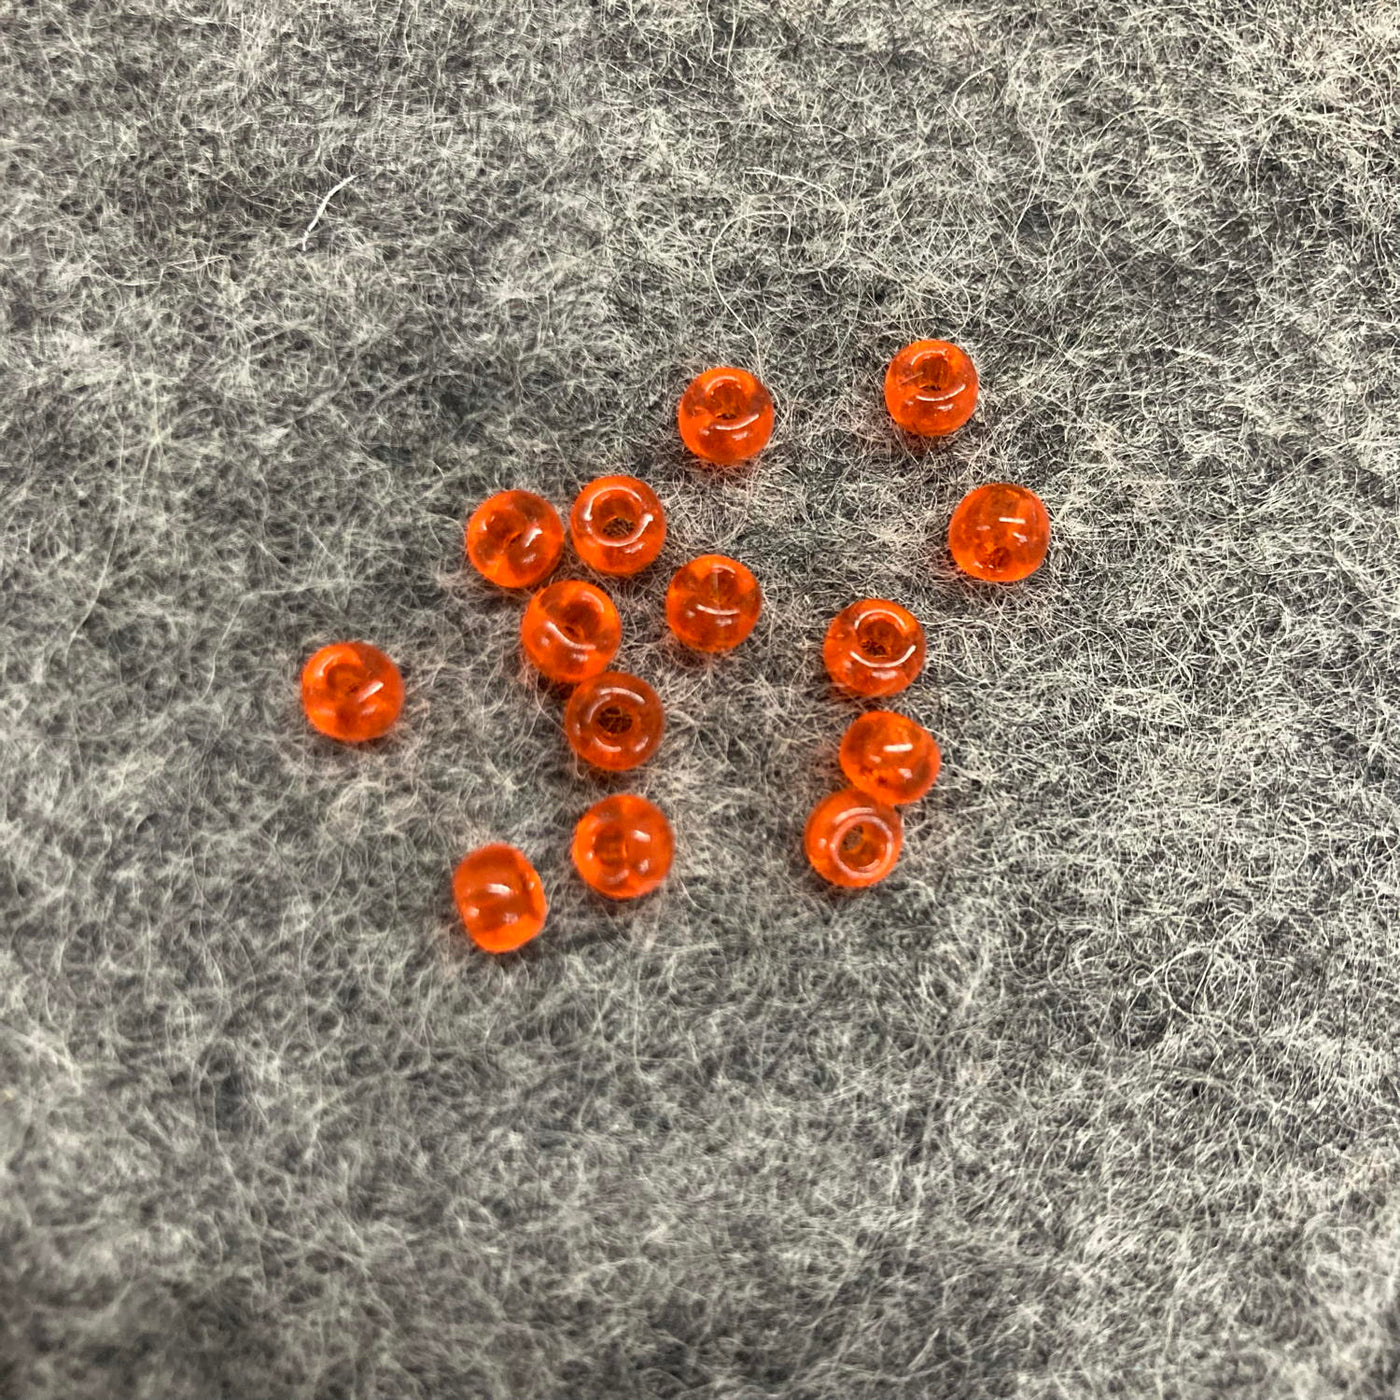 Seed Beads in Opaque Orange by Miyuki